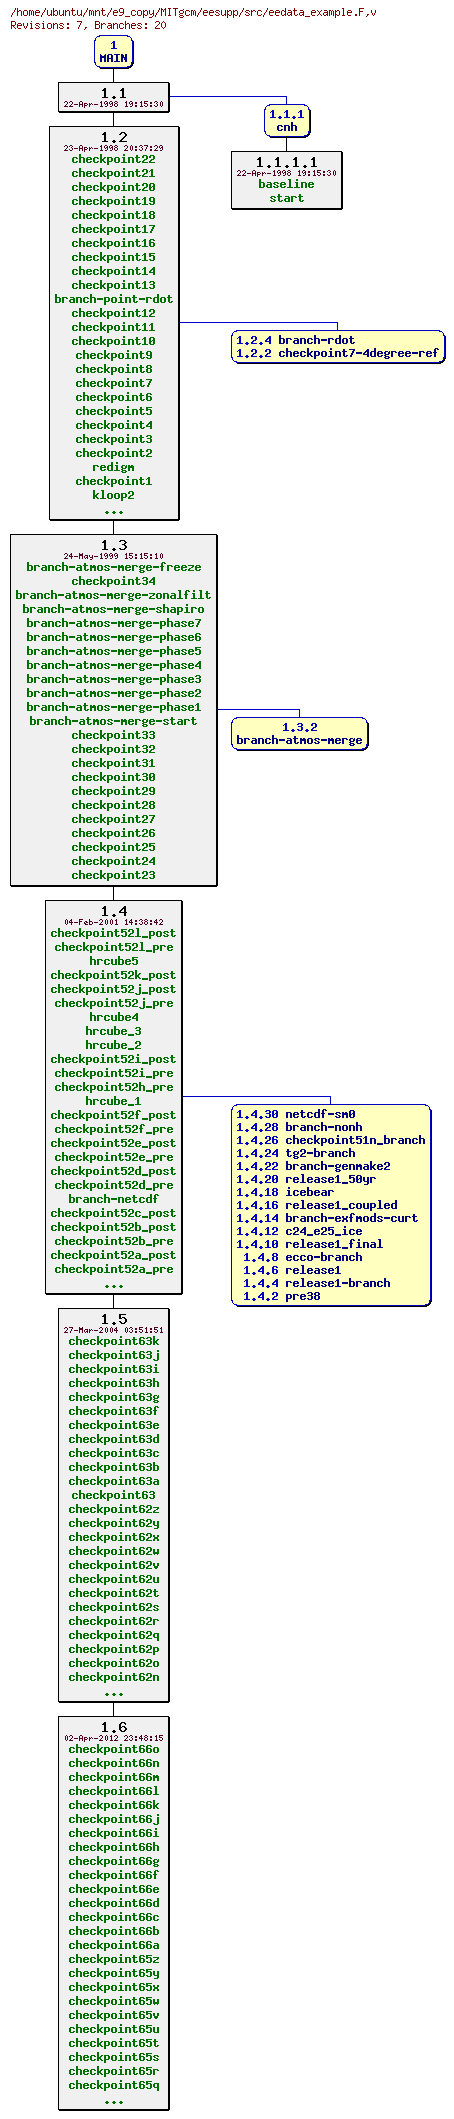 Revisions of MITgcm/eesupp/src/eedata_example.F